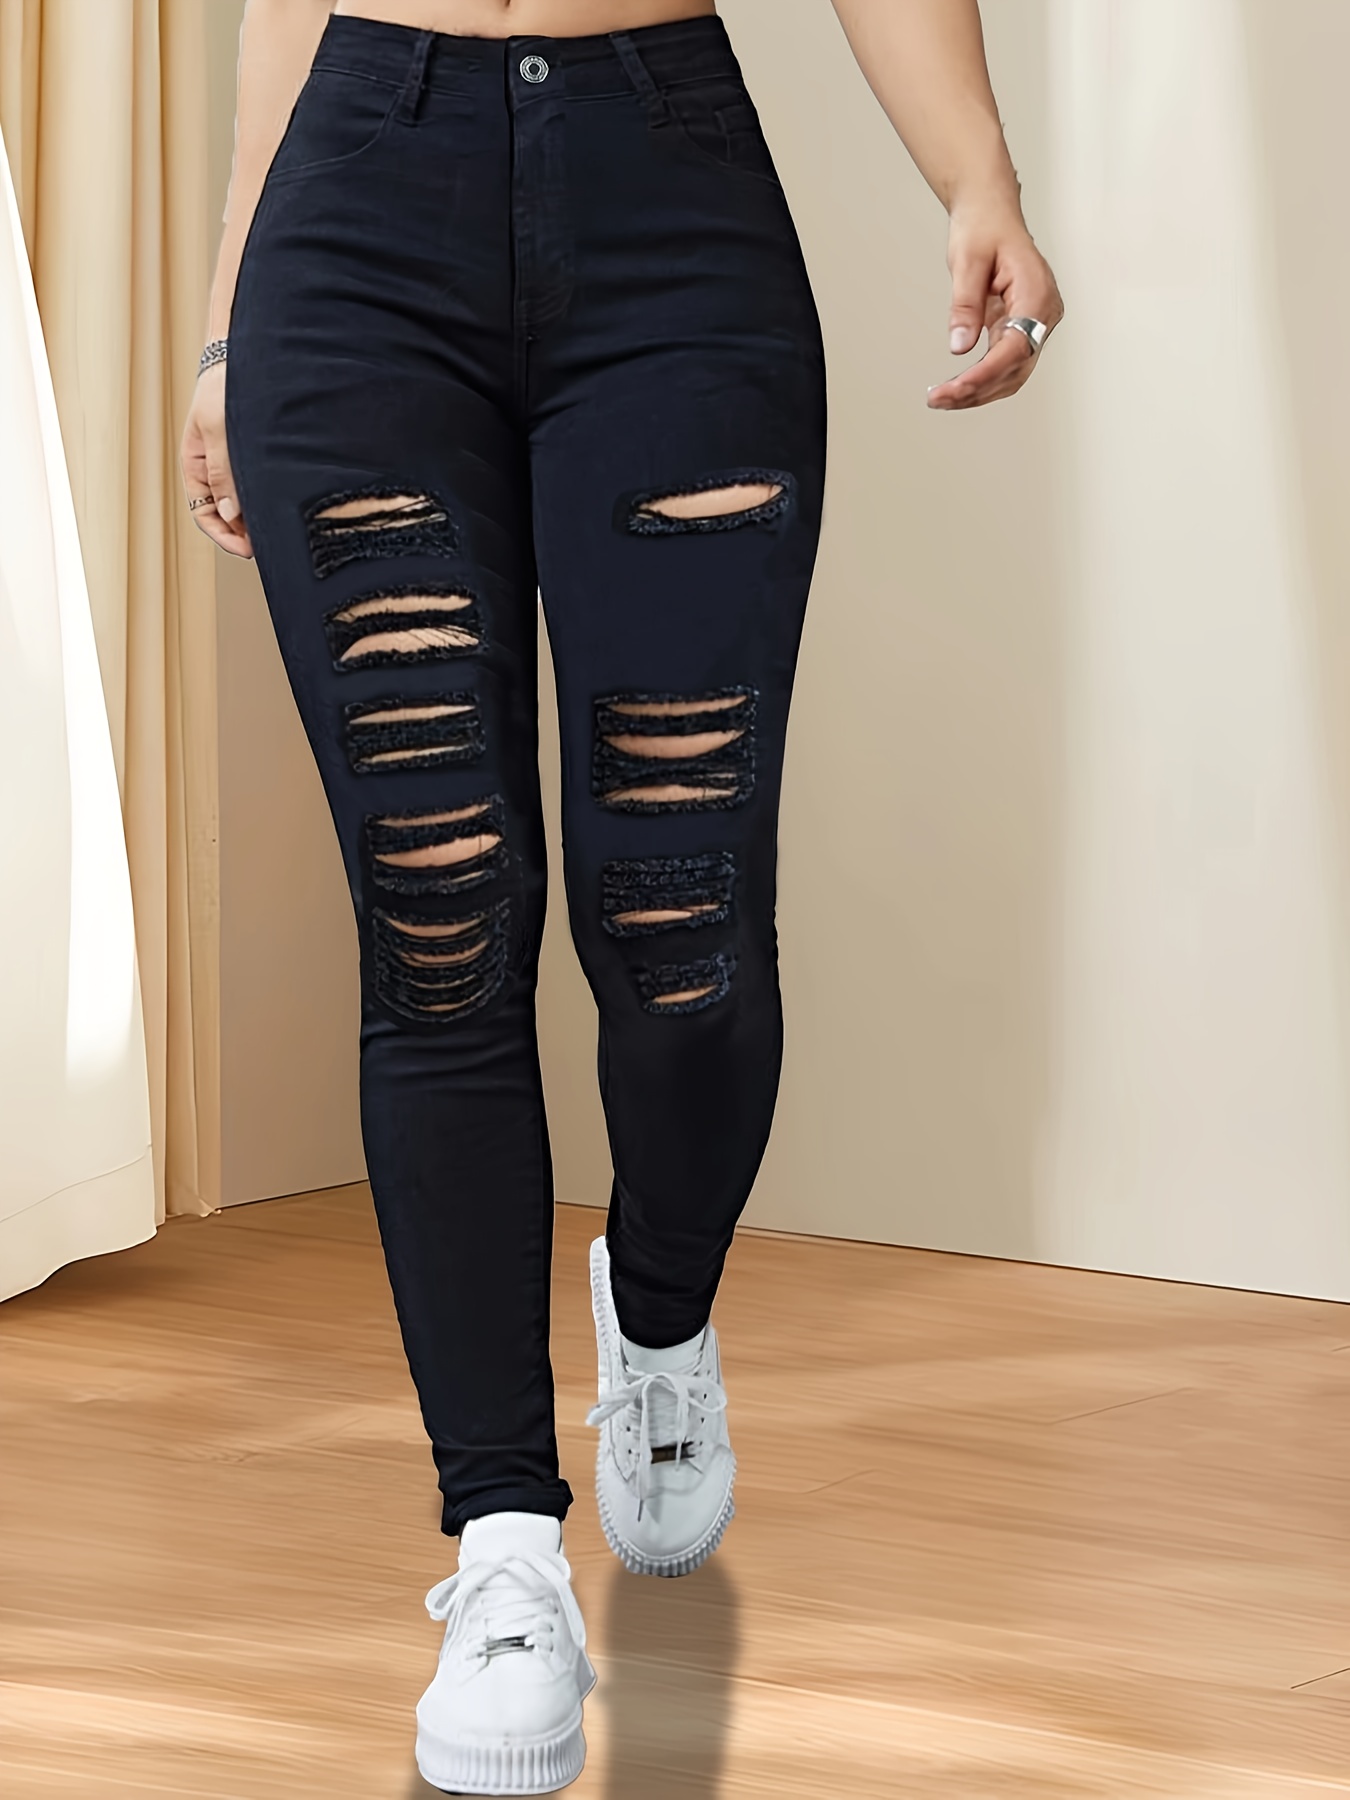 Women's Legging Casual Fitted Jeans Slim High Waist Elastic Leggings